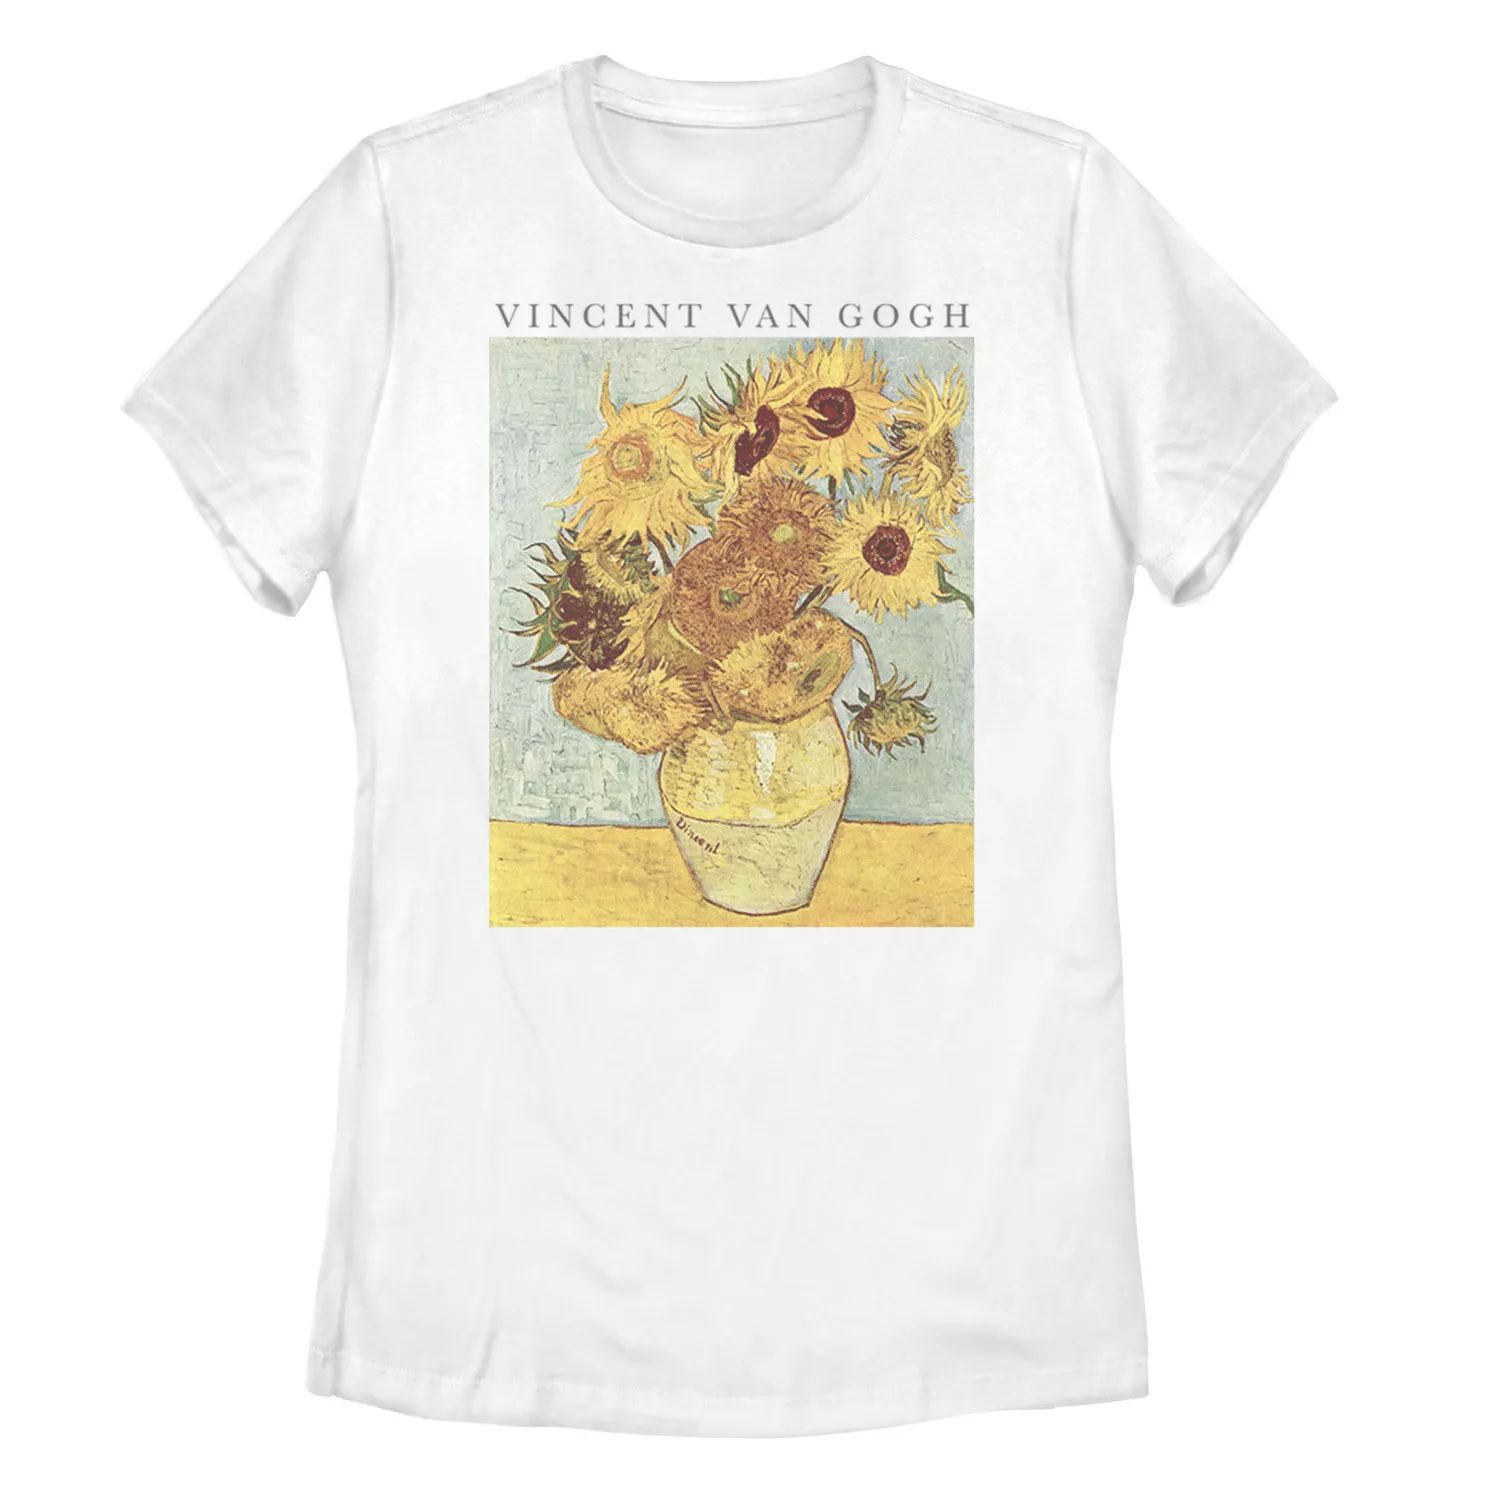 Детская футболка с цветком Винсента Ван Гога детская футболка кот с цветком 128 красный